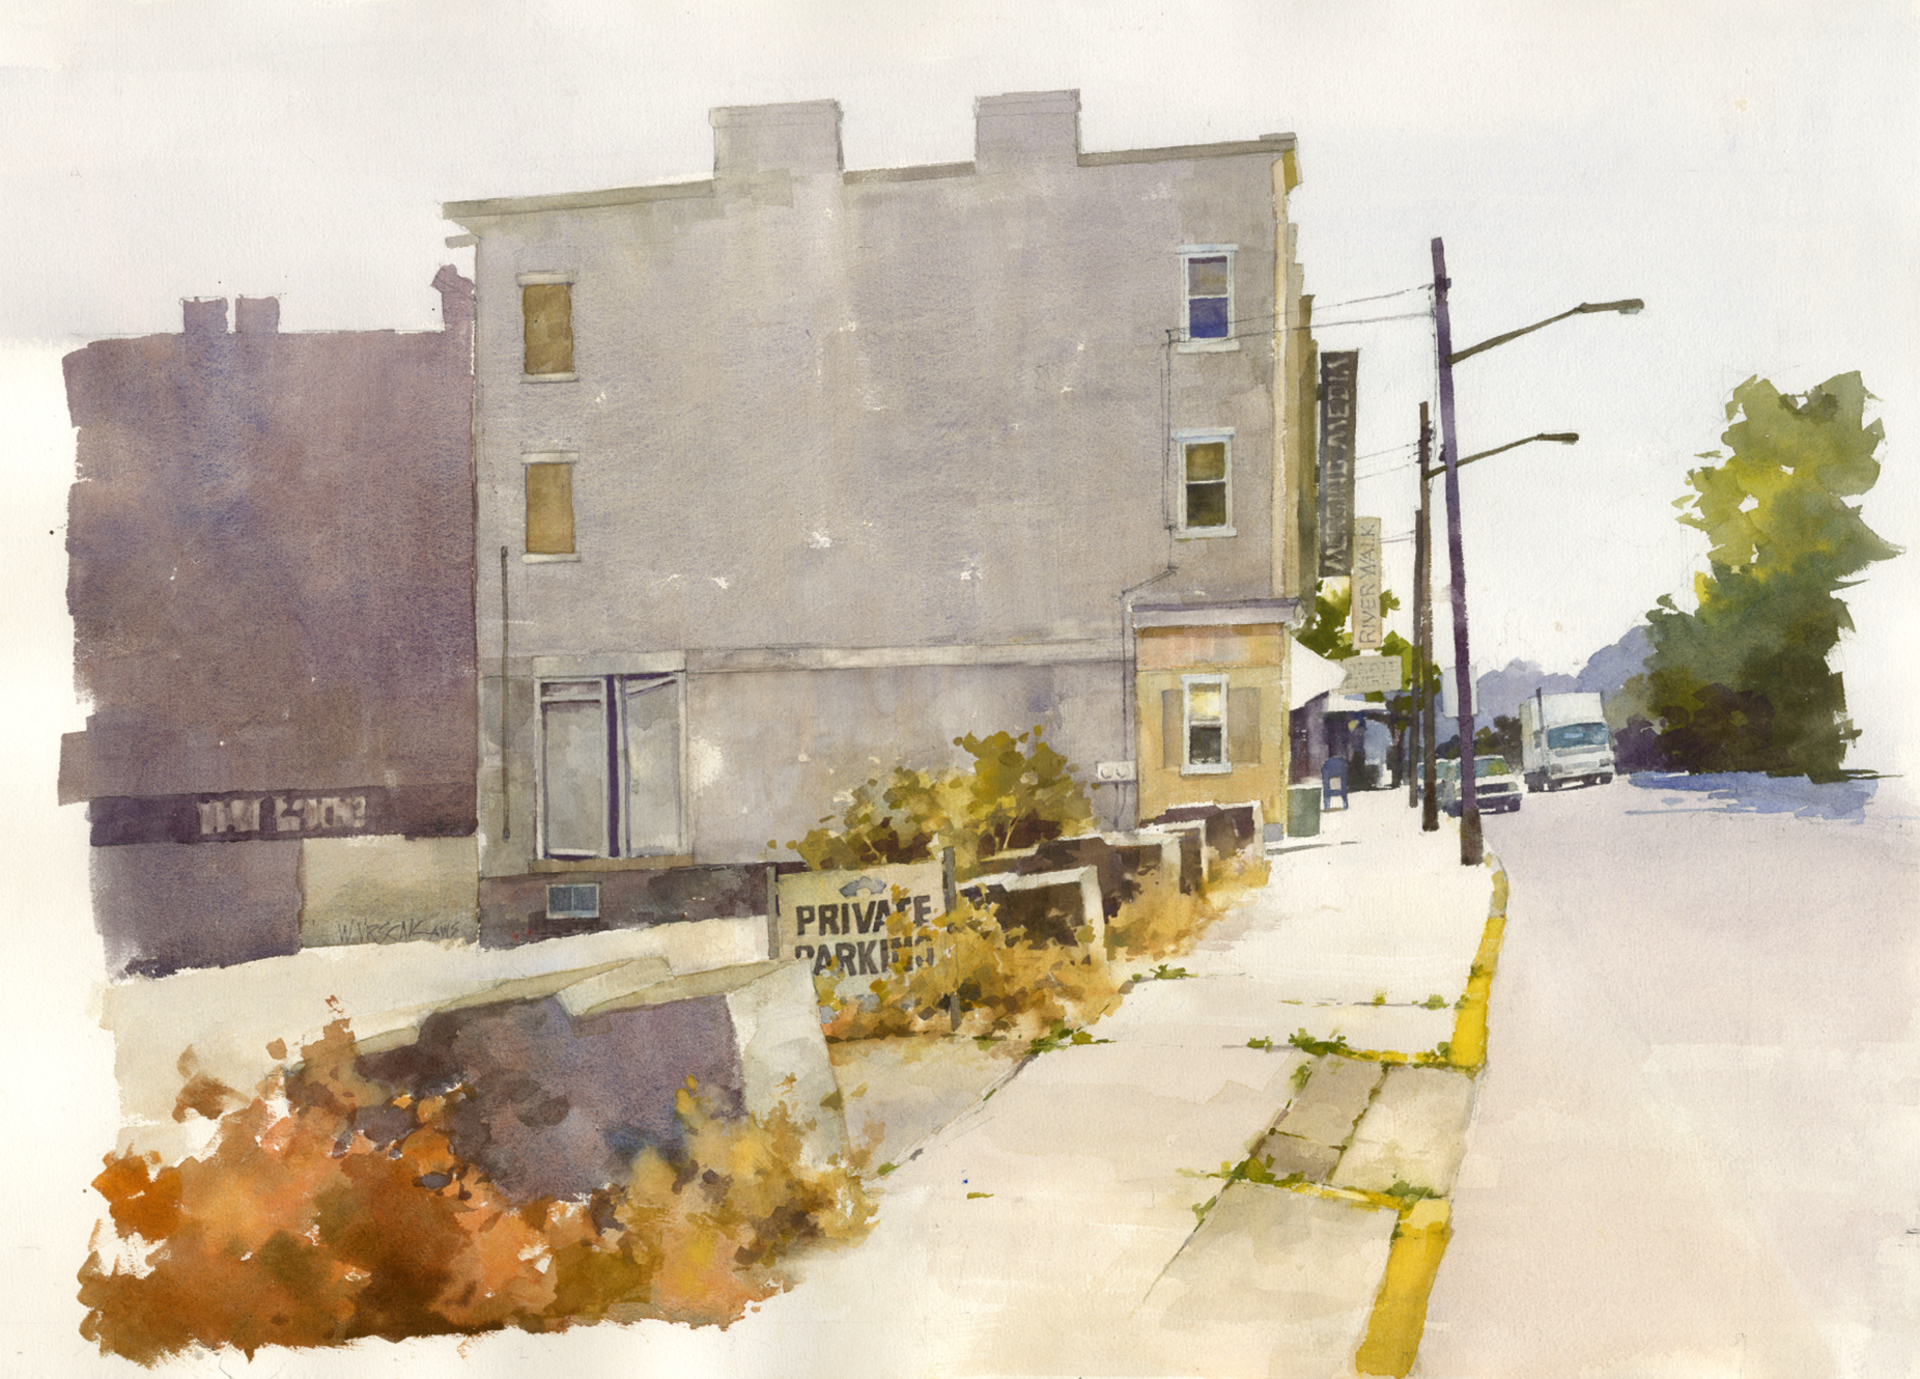 Carson Street by Bill Vrscak